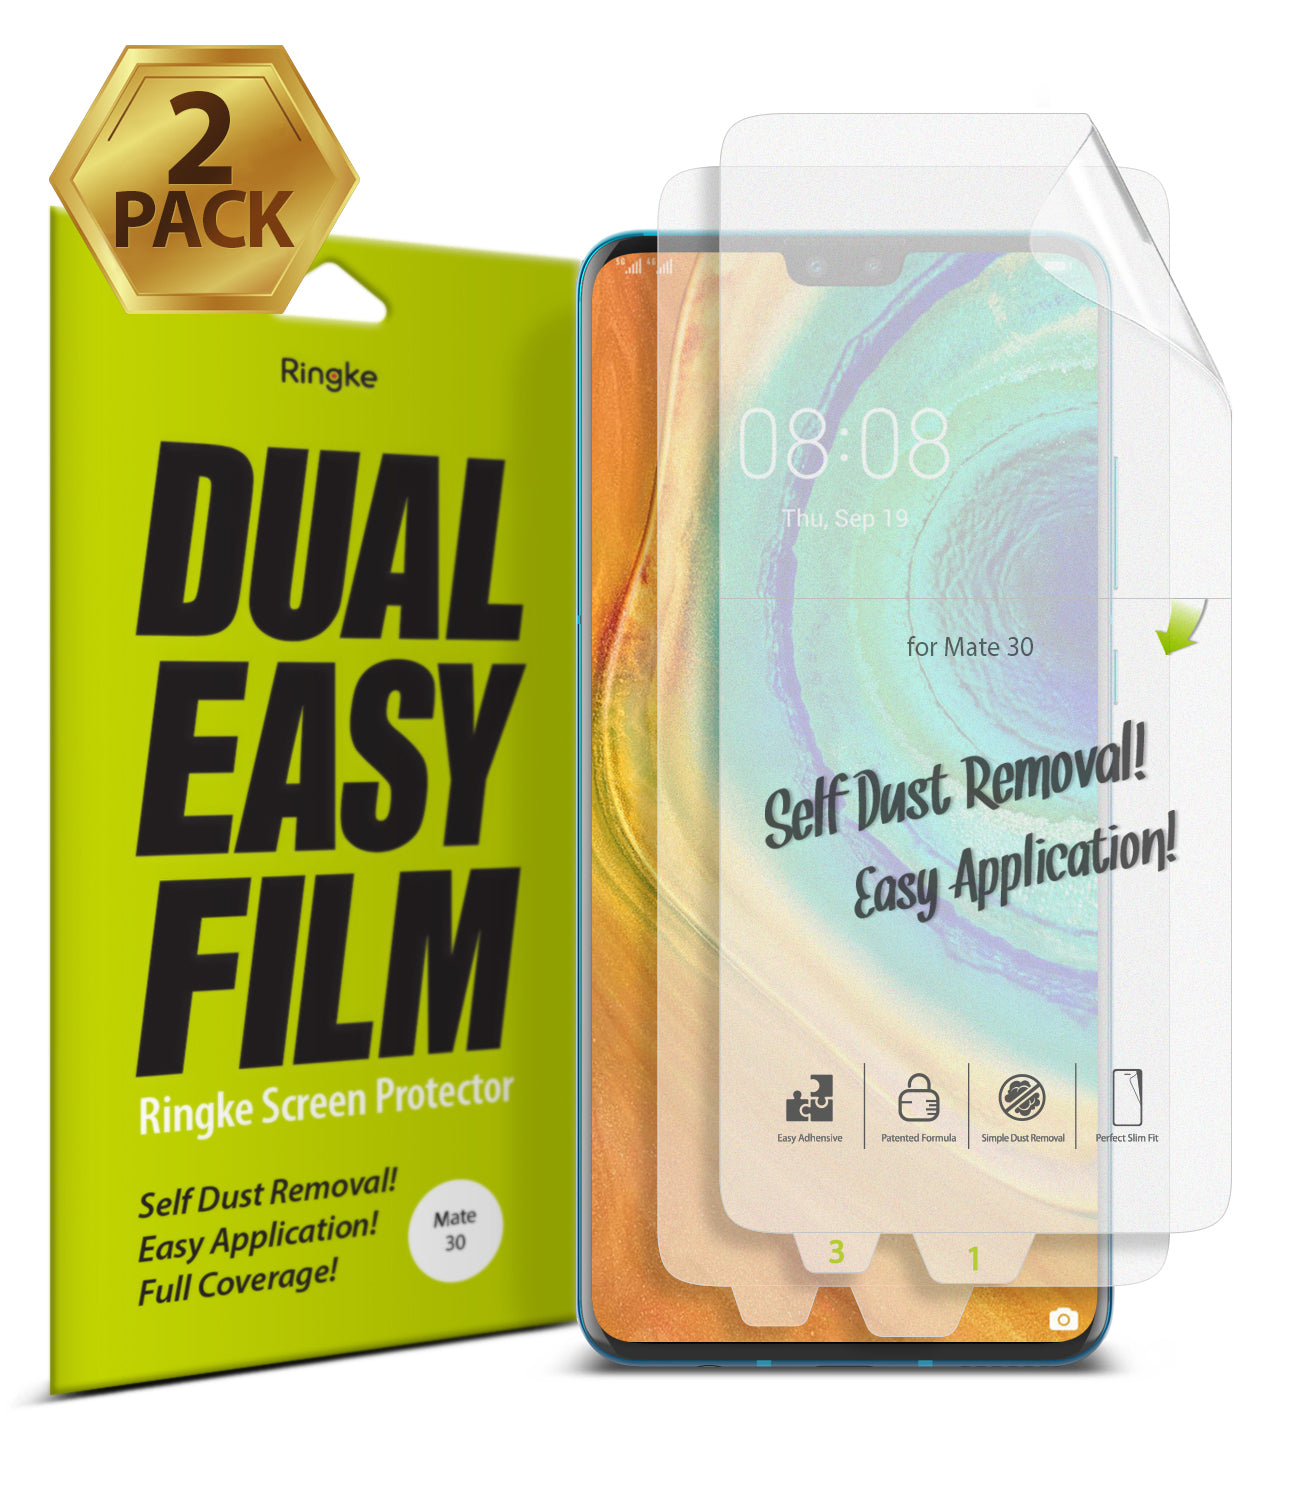 Huawei Mate 30 [Dual Easy Full Cover] Screen Protector [2 Pack]